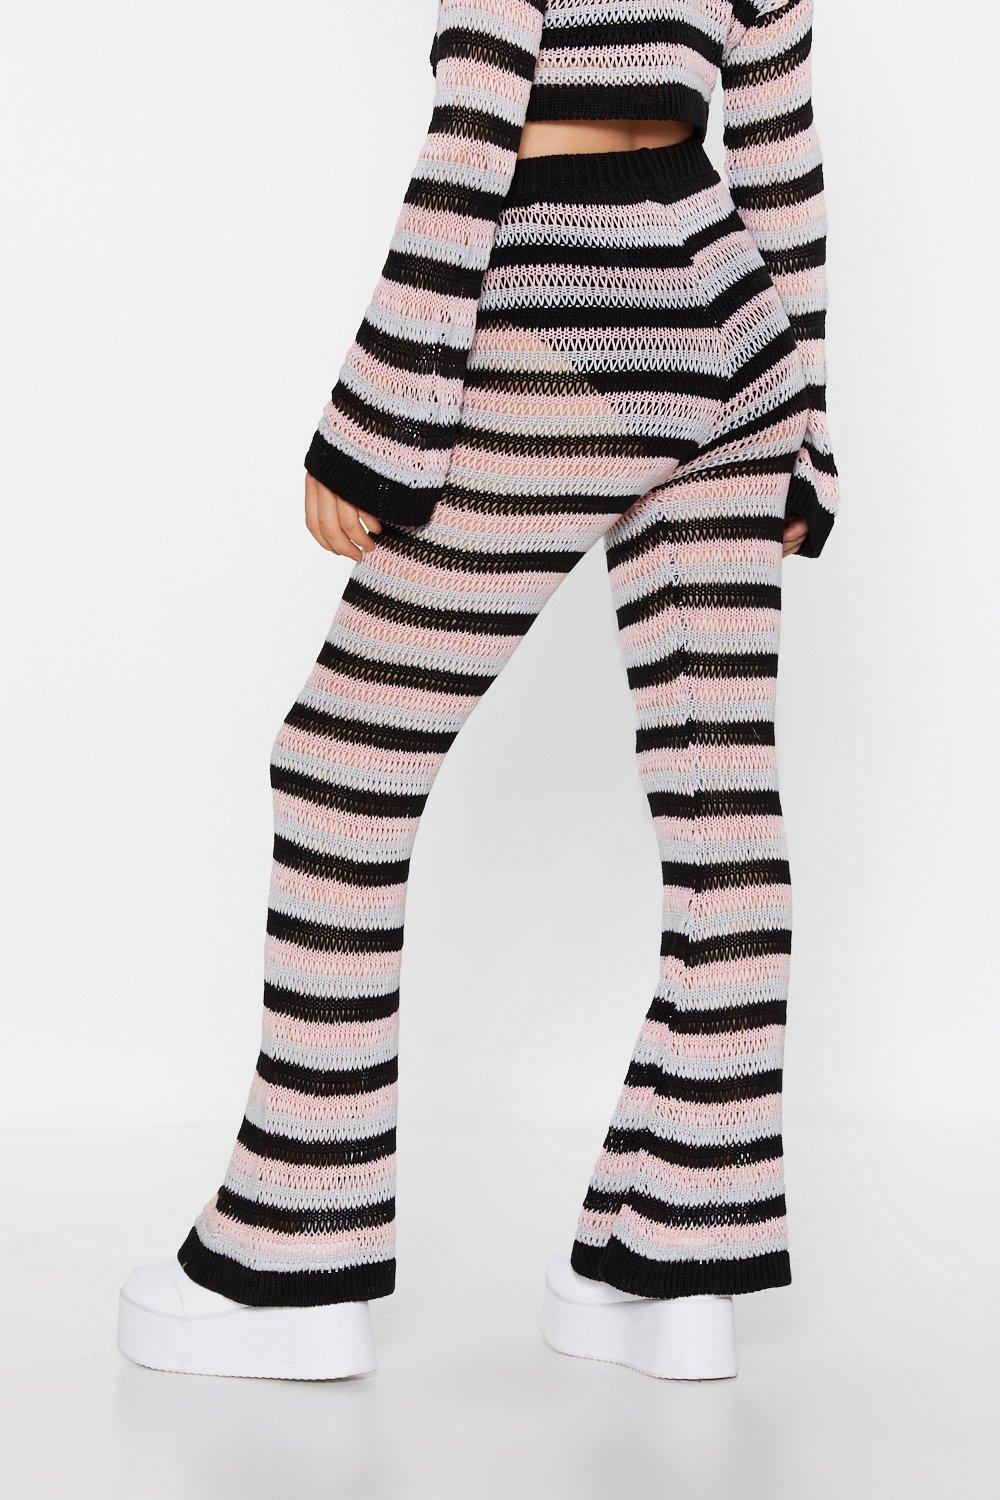 Wild Fable Women's High-Rise Crochet Knit Flare Pants Cool Multi Striped  XXS - ShopStyle